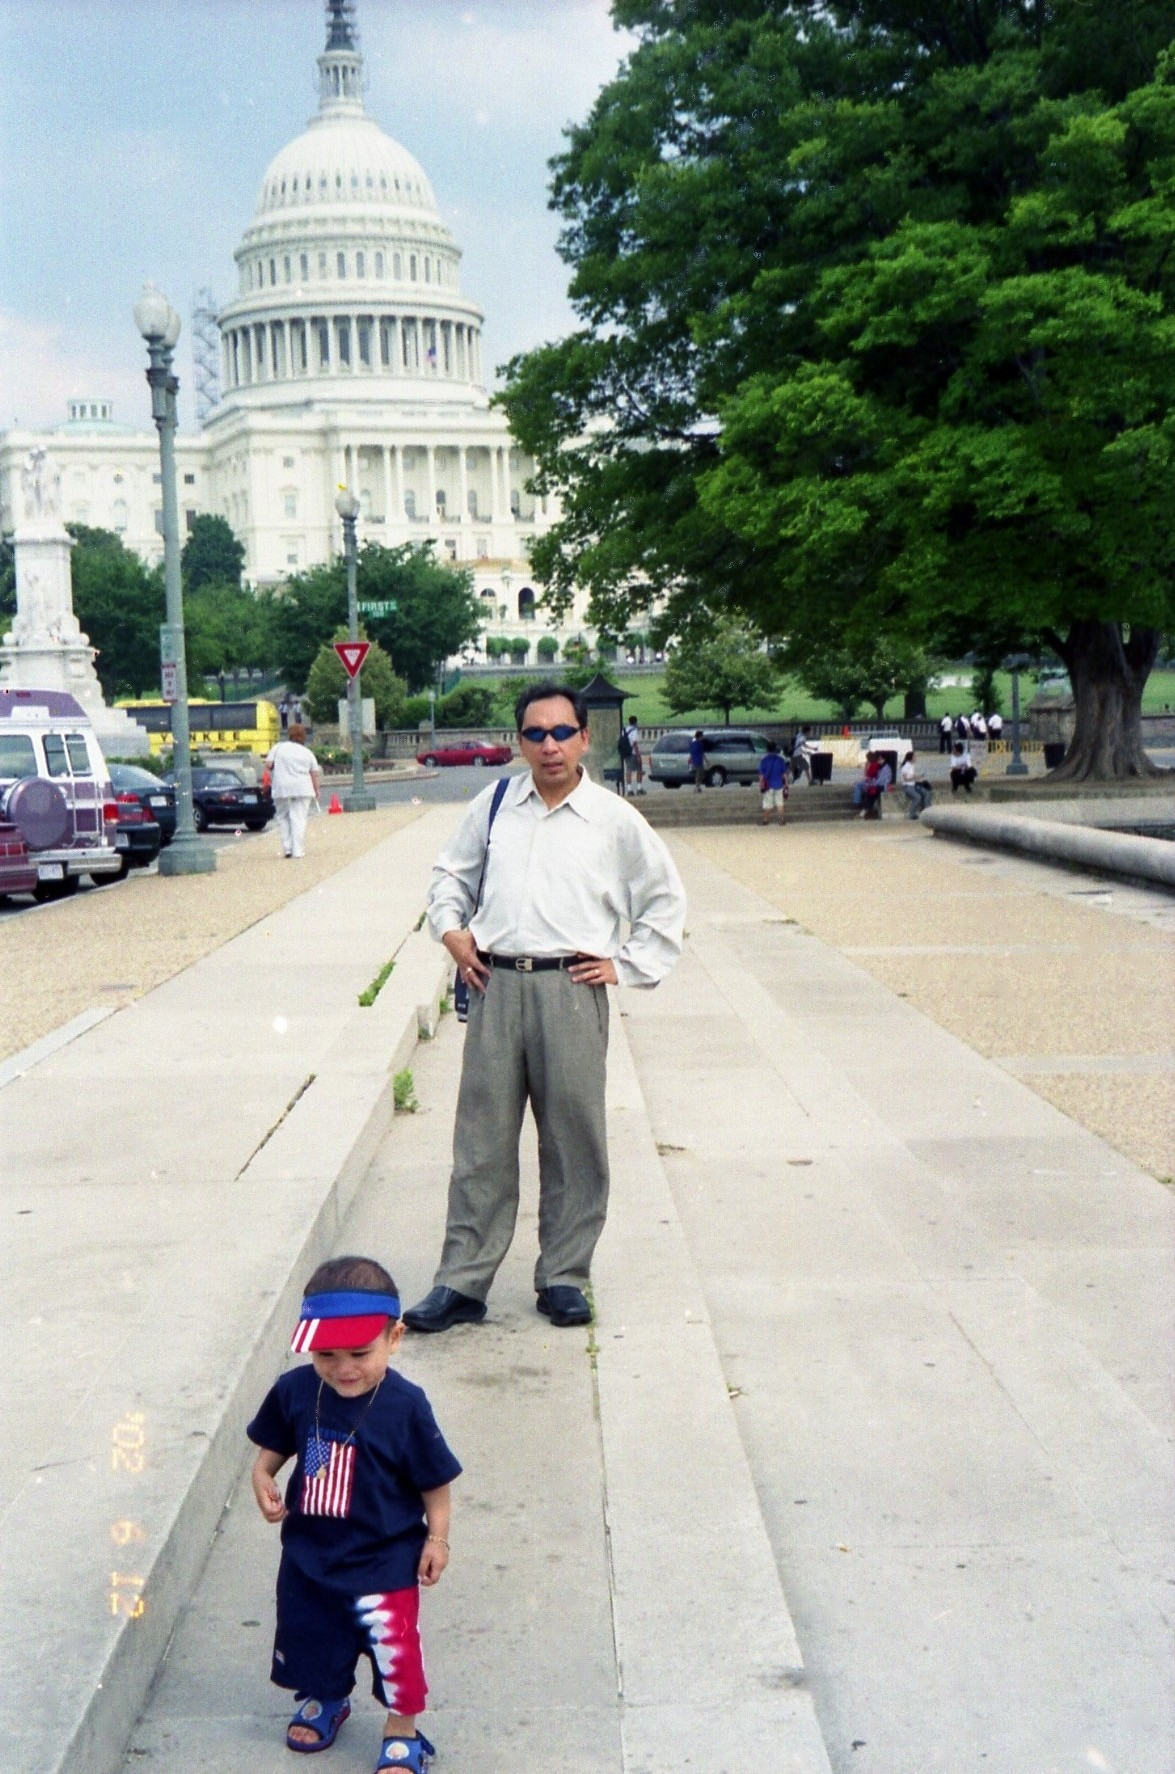 Congress, Washington DC